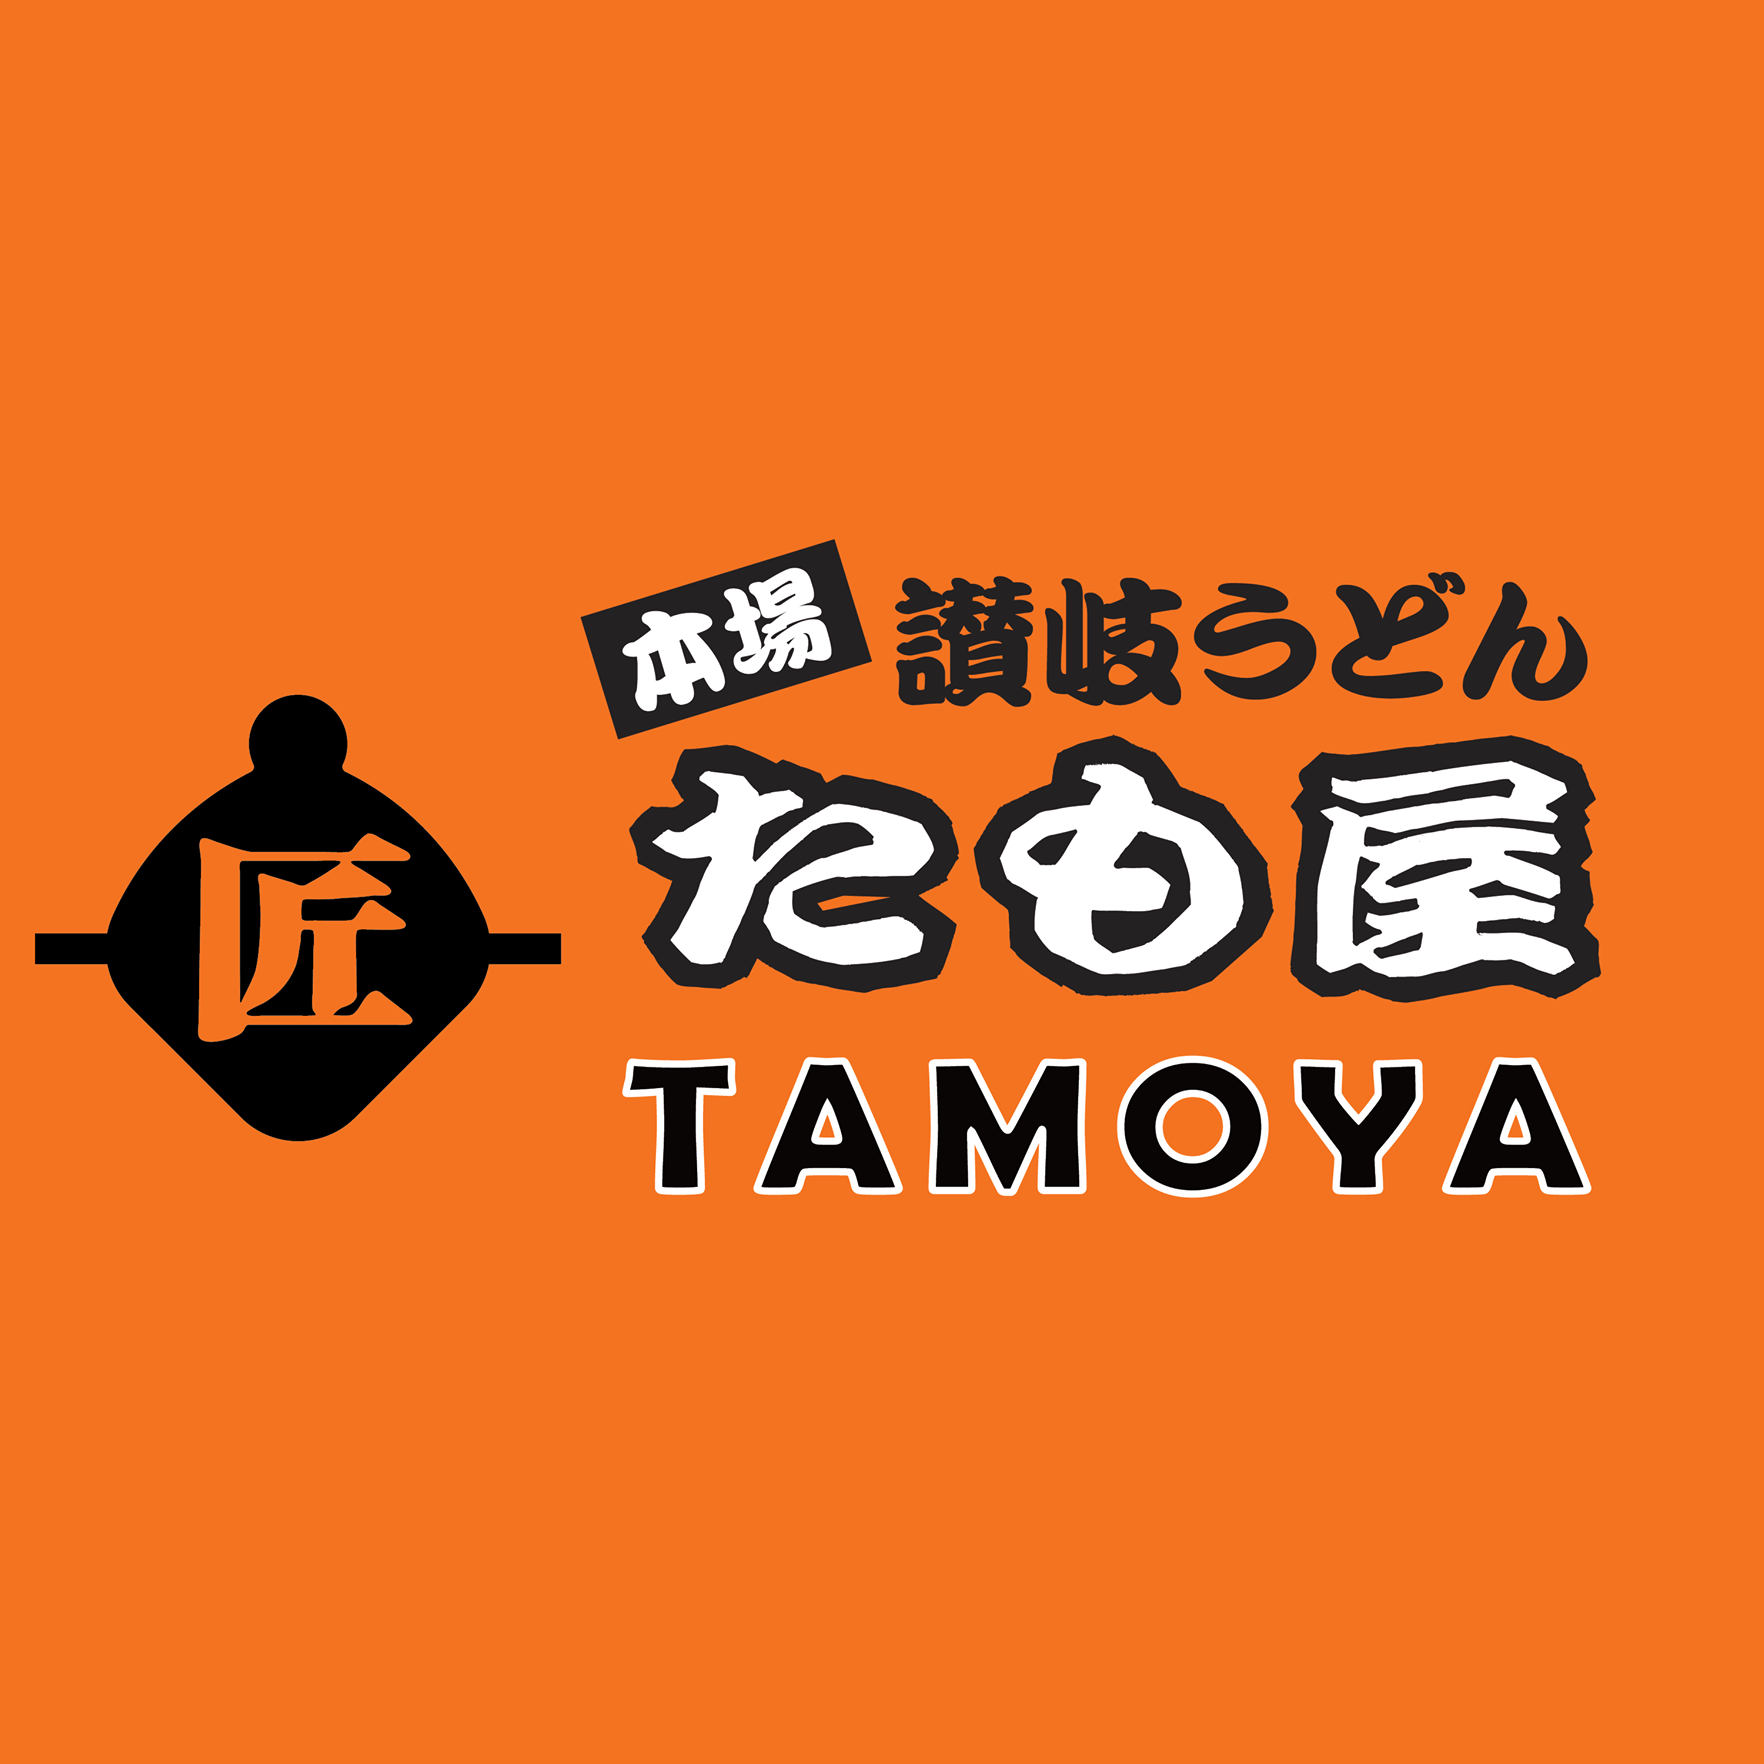 Tamoya Udon and Tempura